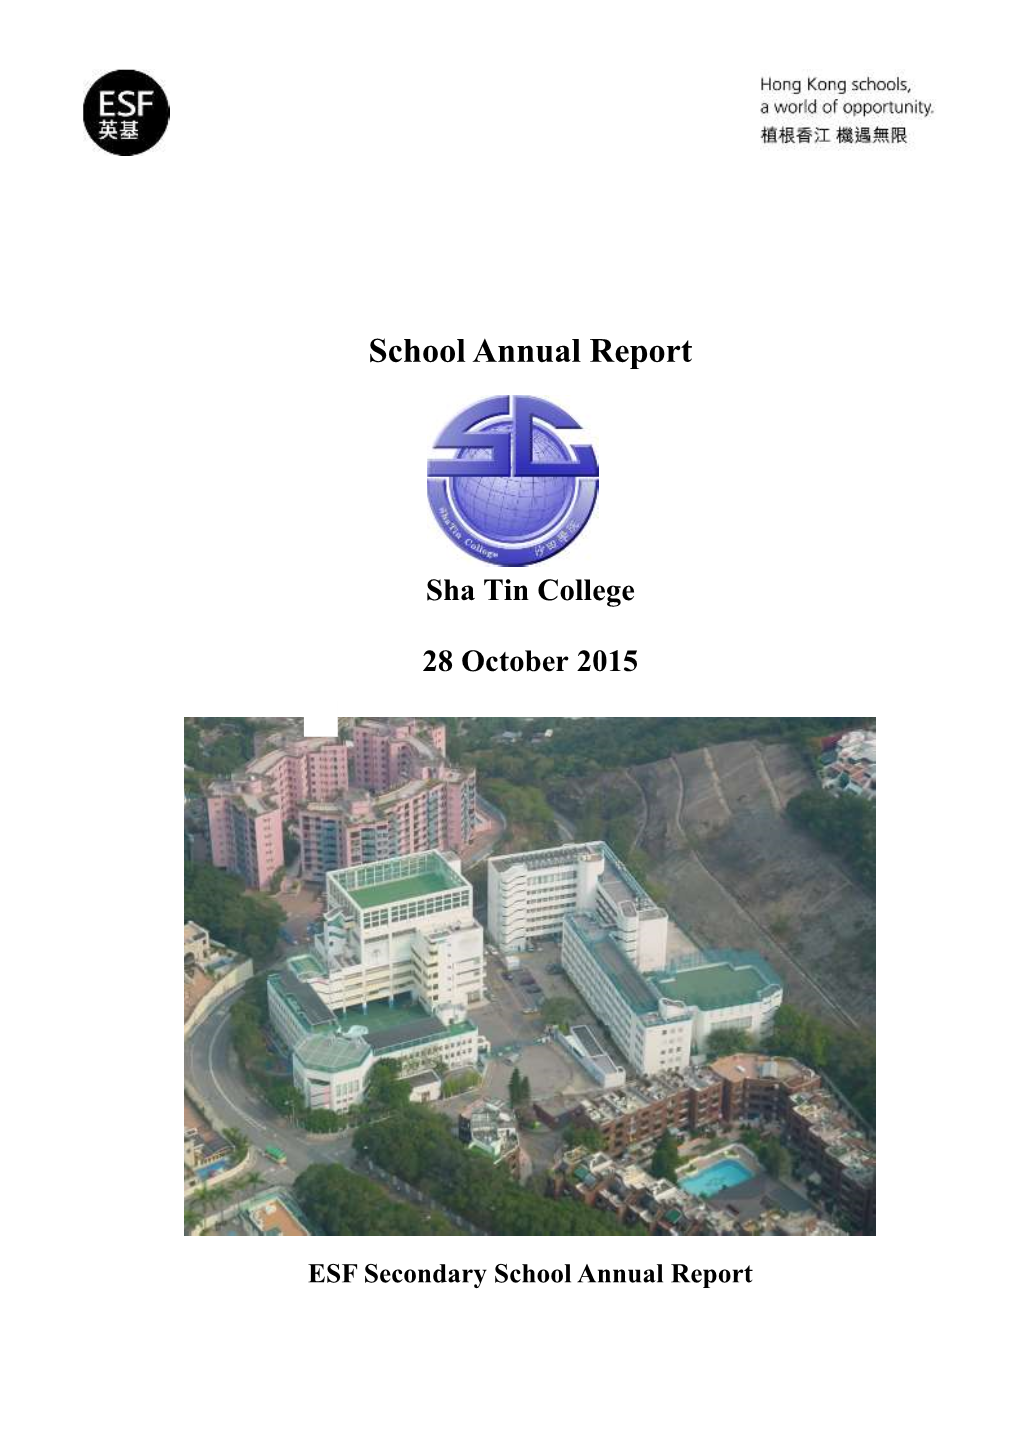 ESF Secondary School Annual Report